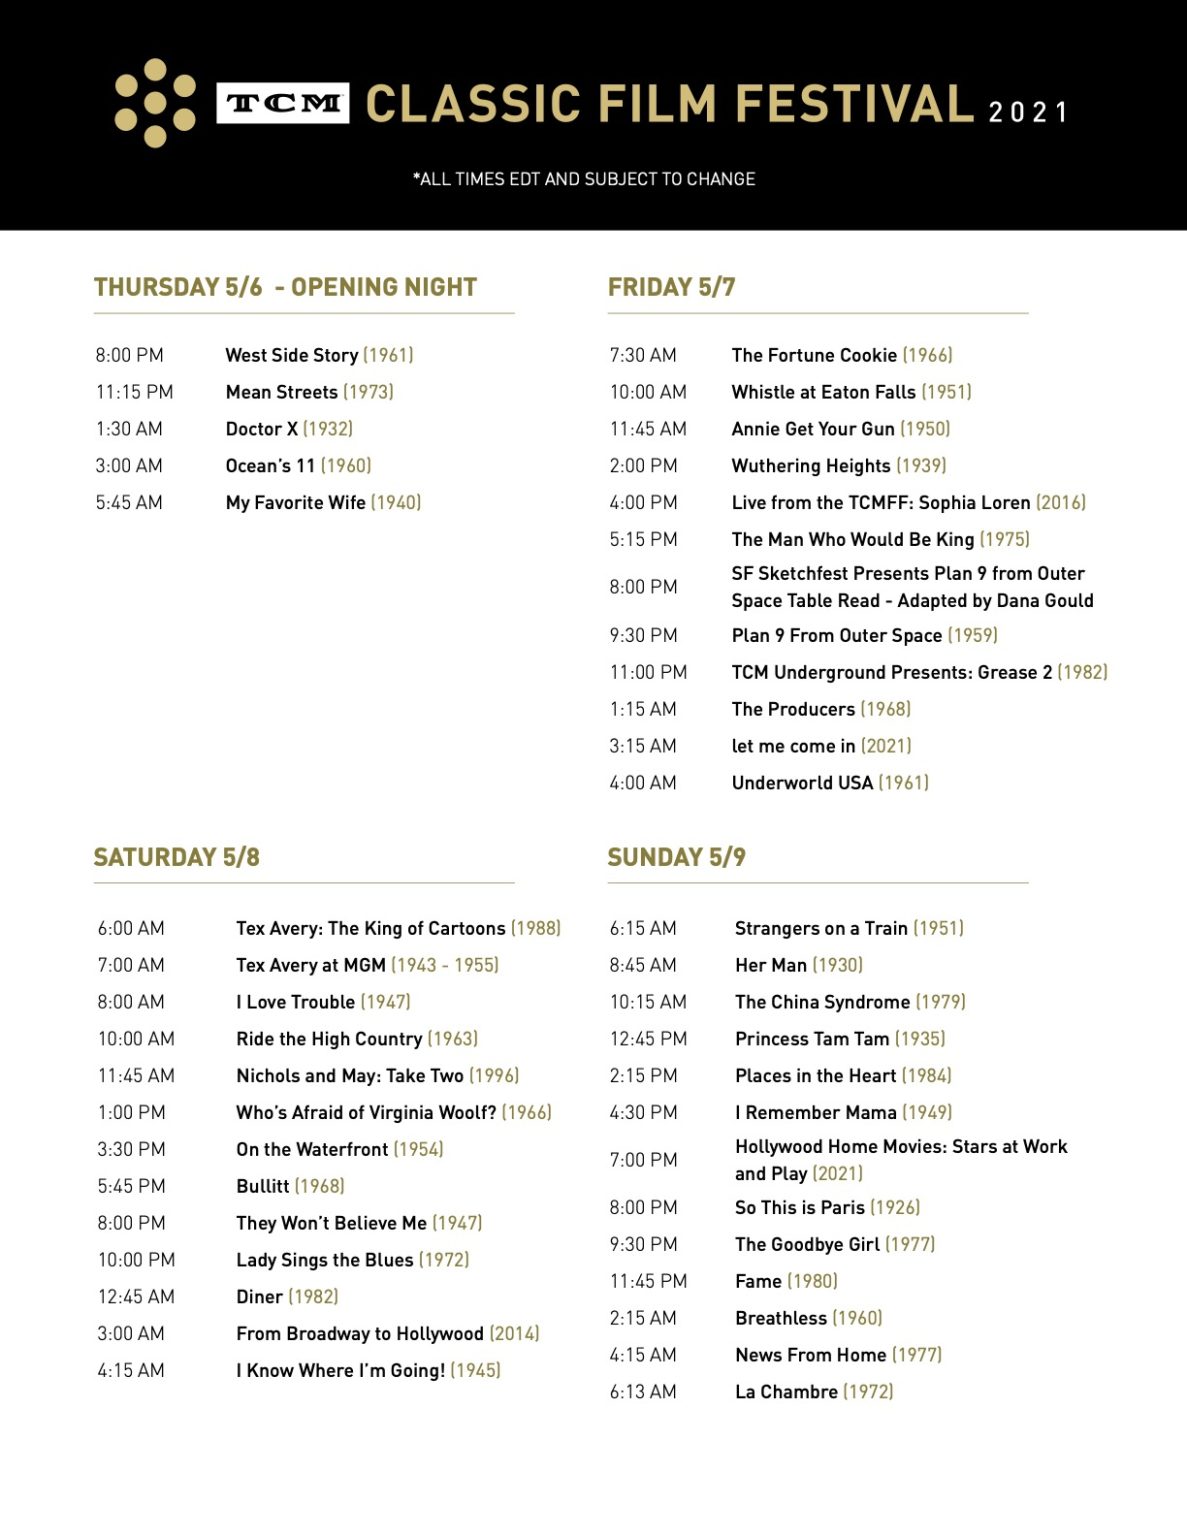 Full Schedule Released For 2021 TCM Classic Film Festival. Criticologos